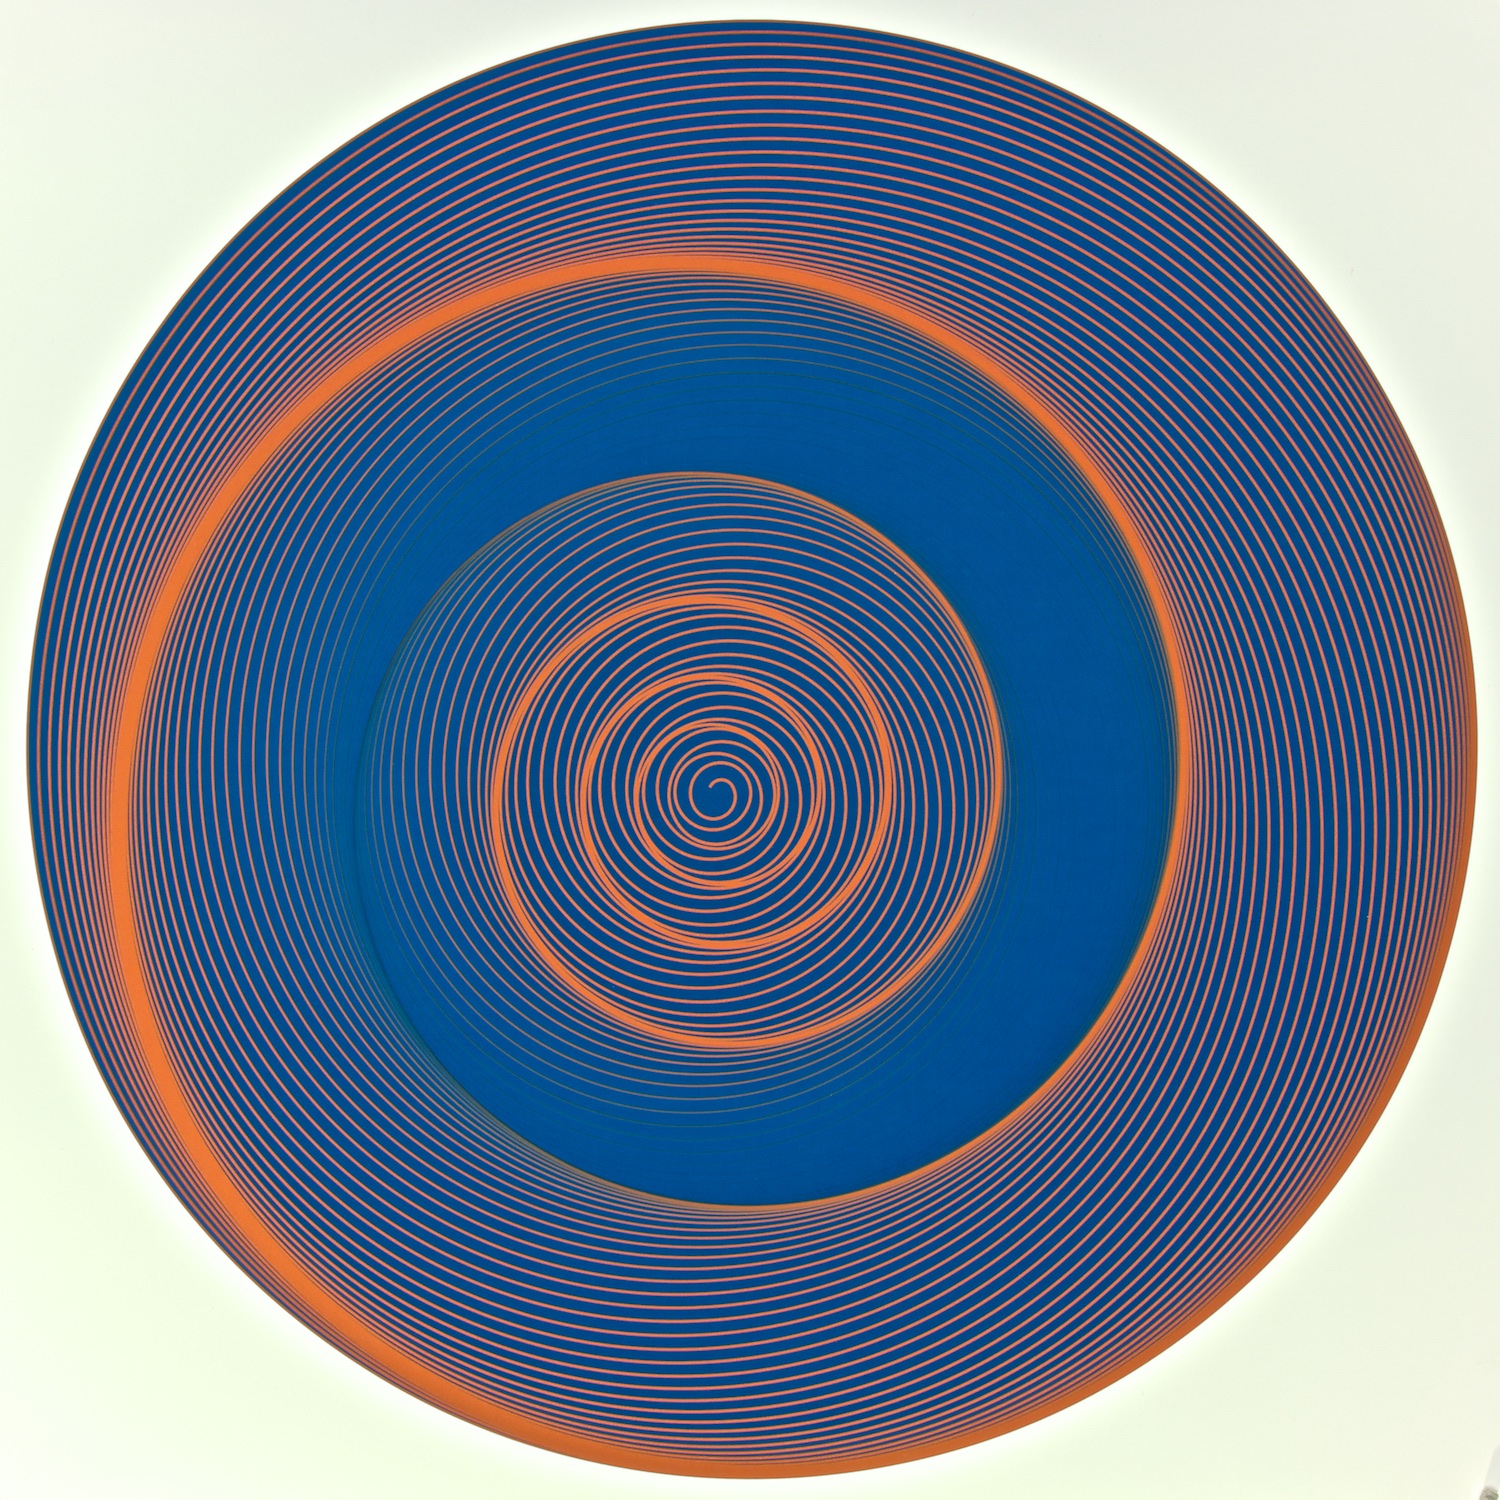   &nbsp;   Metagonal Disks ~67~ Blue Violet with Chinese Vermilion/Blue Violet Gradients Curve , 2014    Digital drawing, inkjet pigments    Art : 23” x 23” (58.5x58.5 cm)    Paper: 25” x 24” Epson UltraSmooth Fine Art Paper  